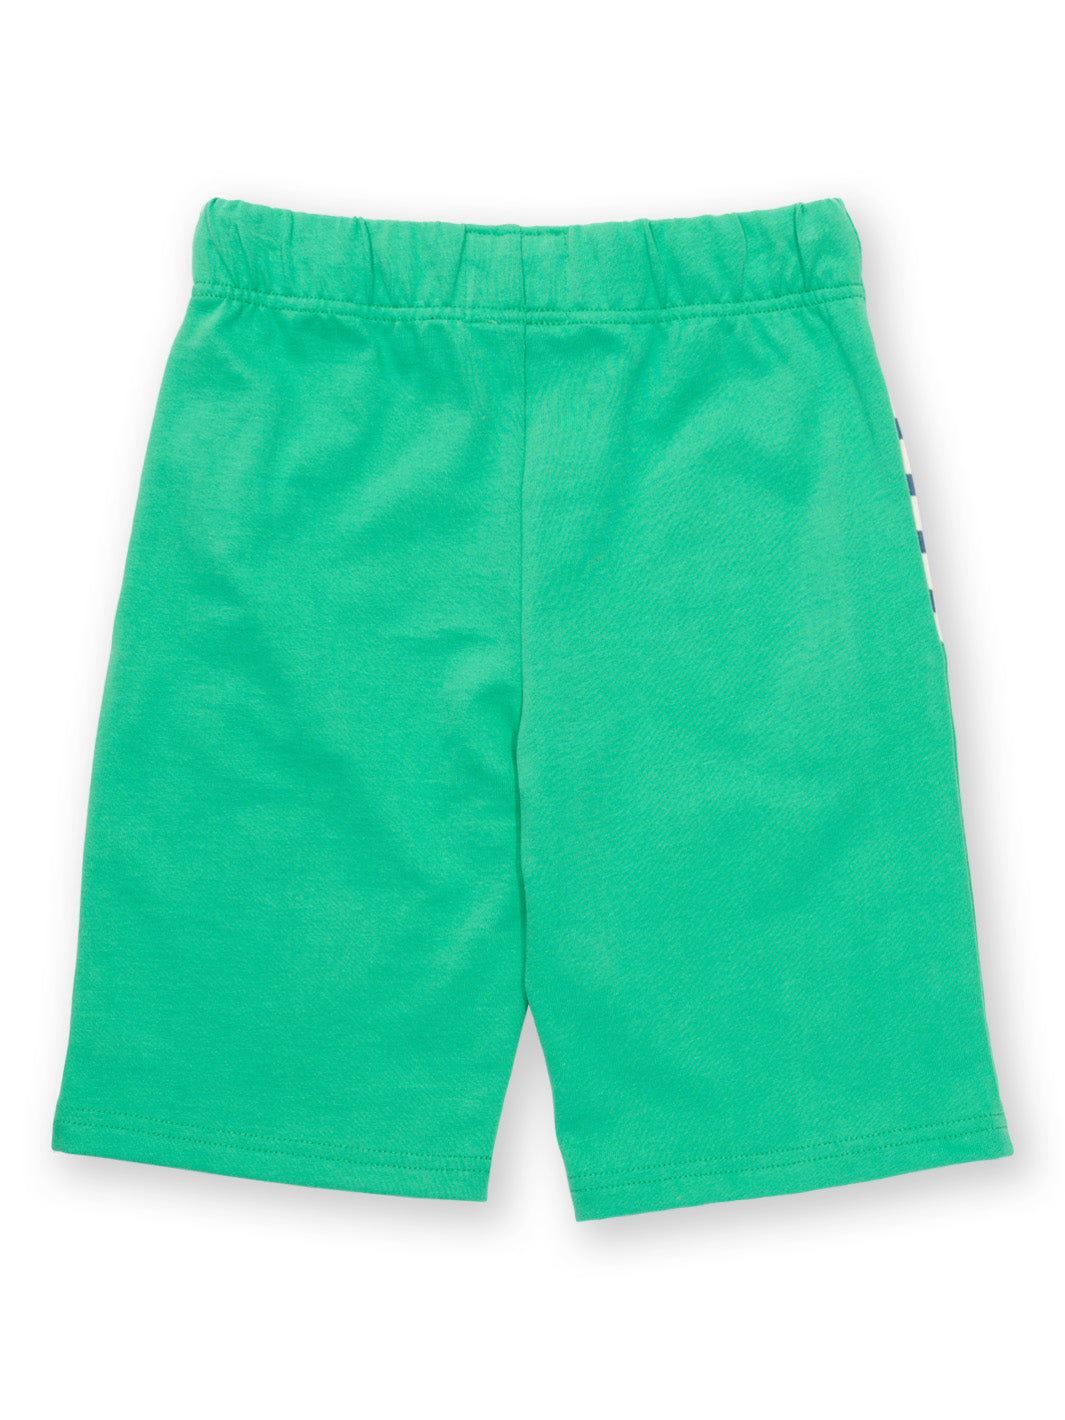 Kite Corfe Green Shorts SALE